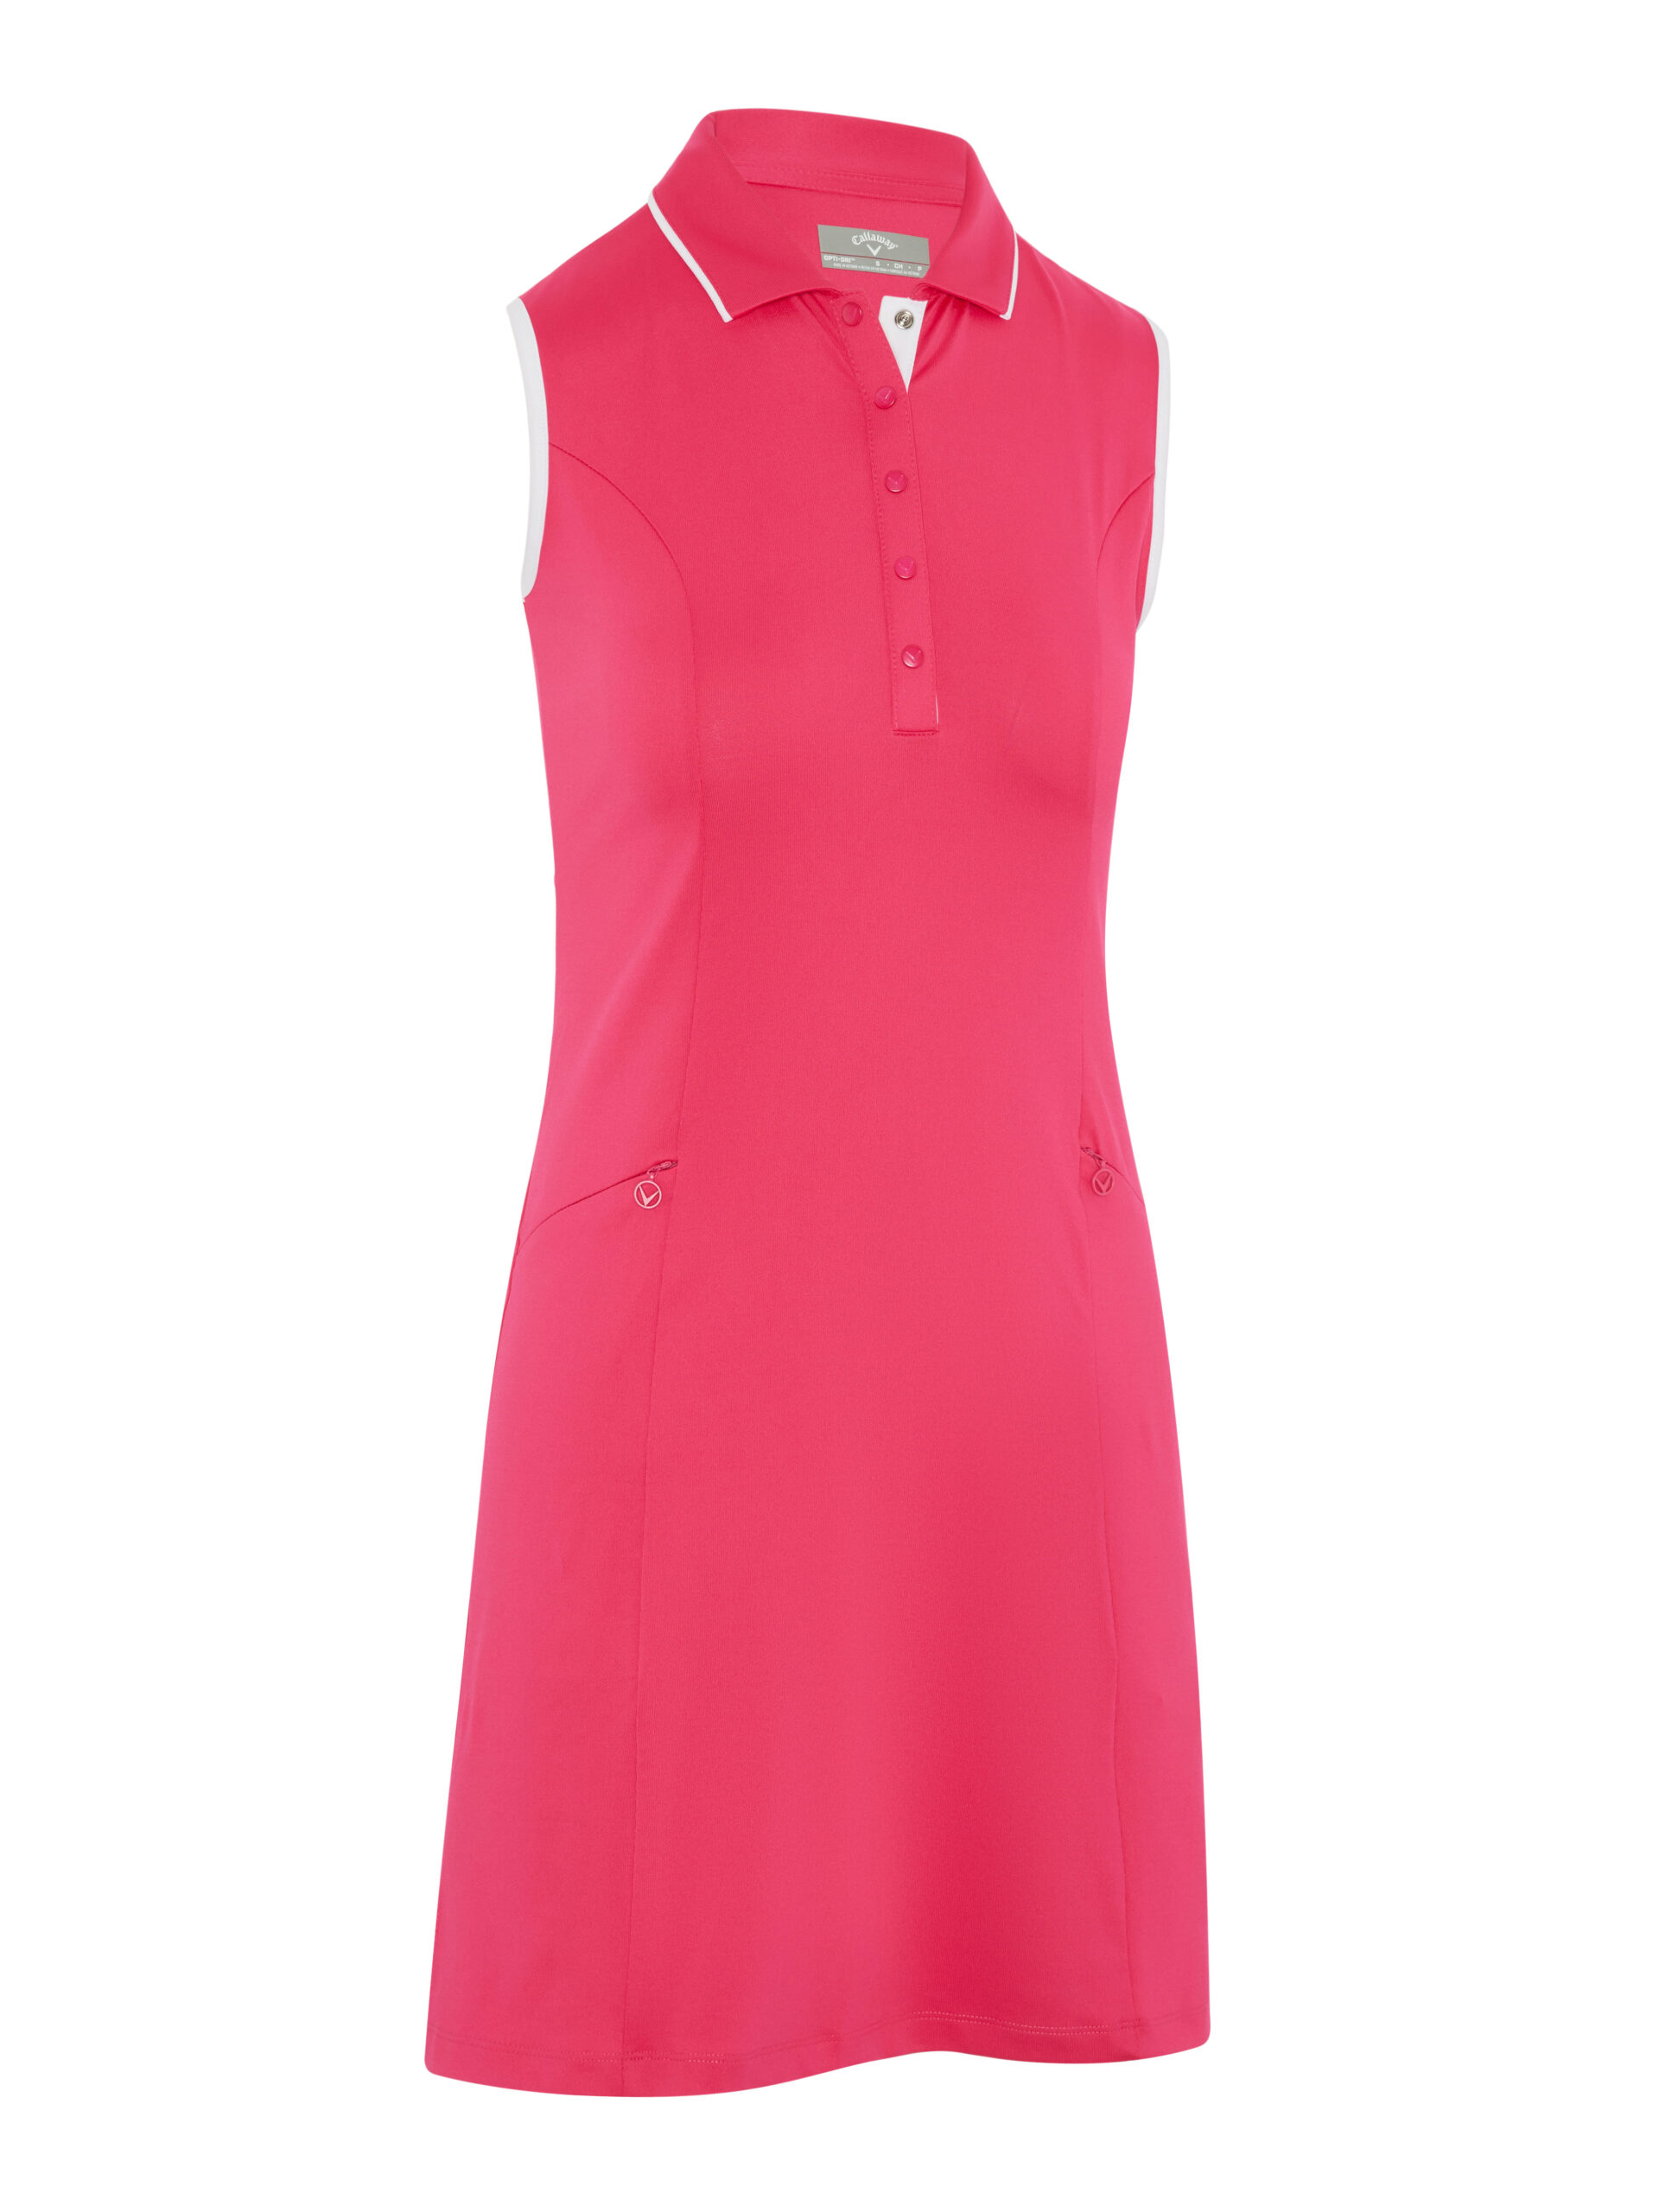 Callaway dámské golfové šaty, růžové, vel. S